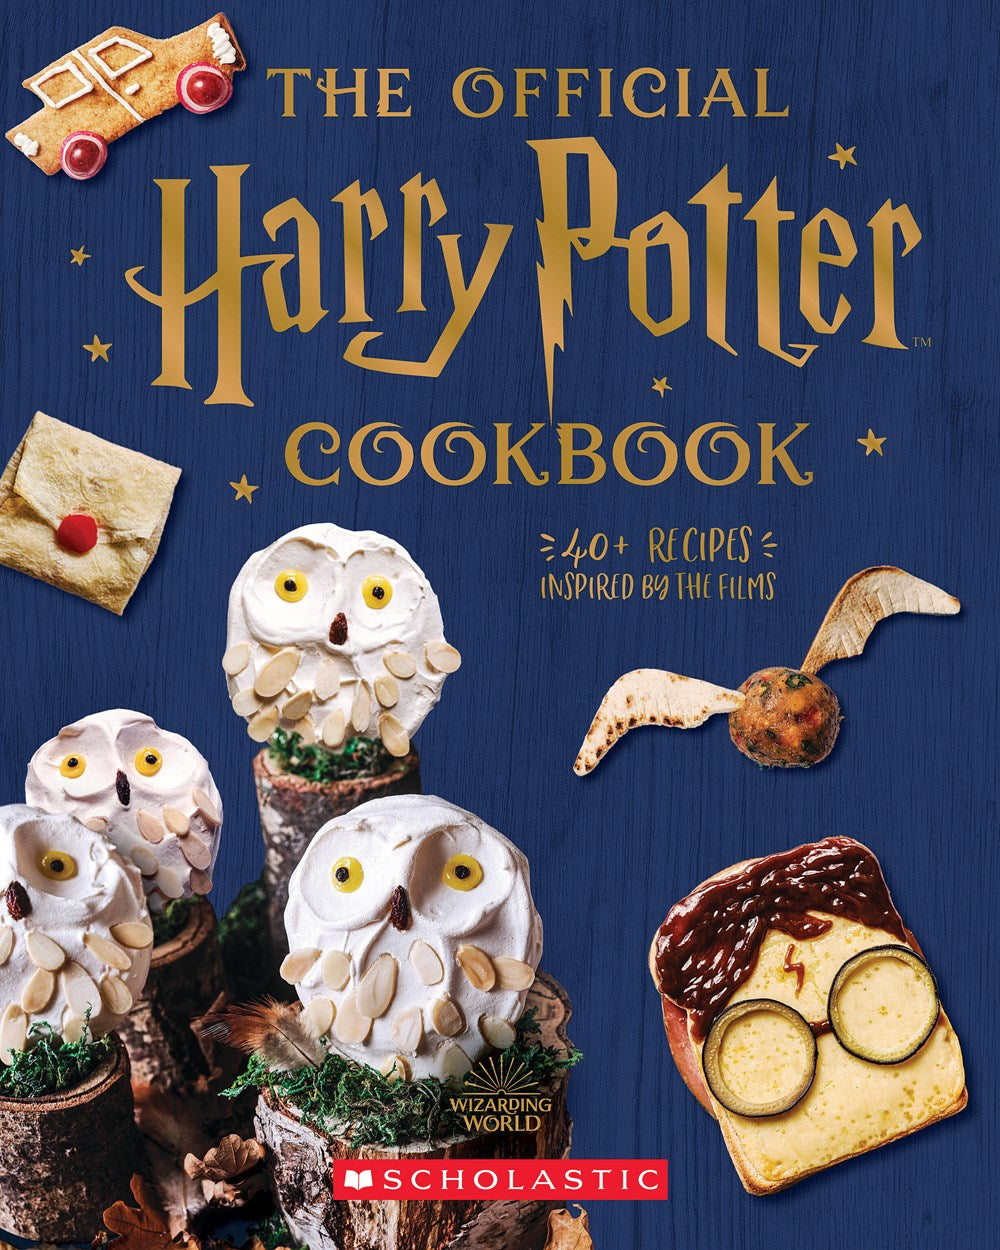 Harry Potter Cookbook